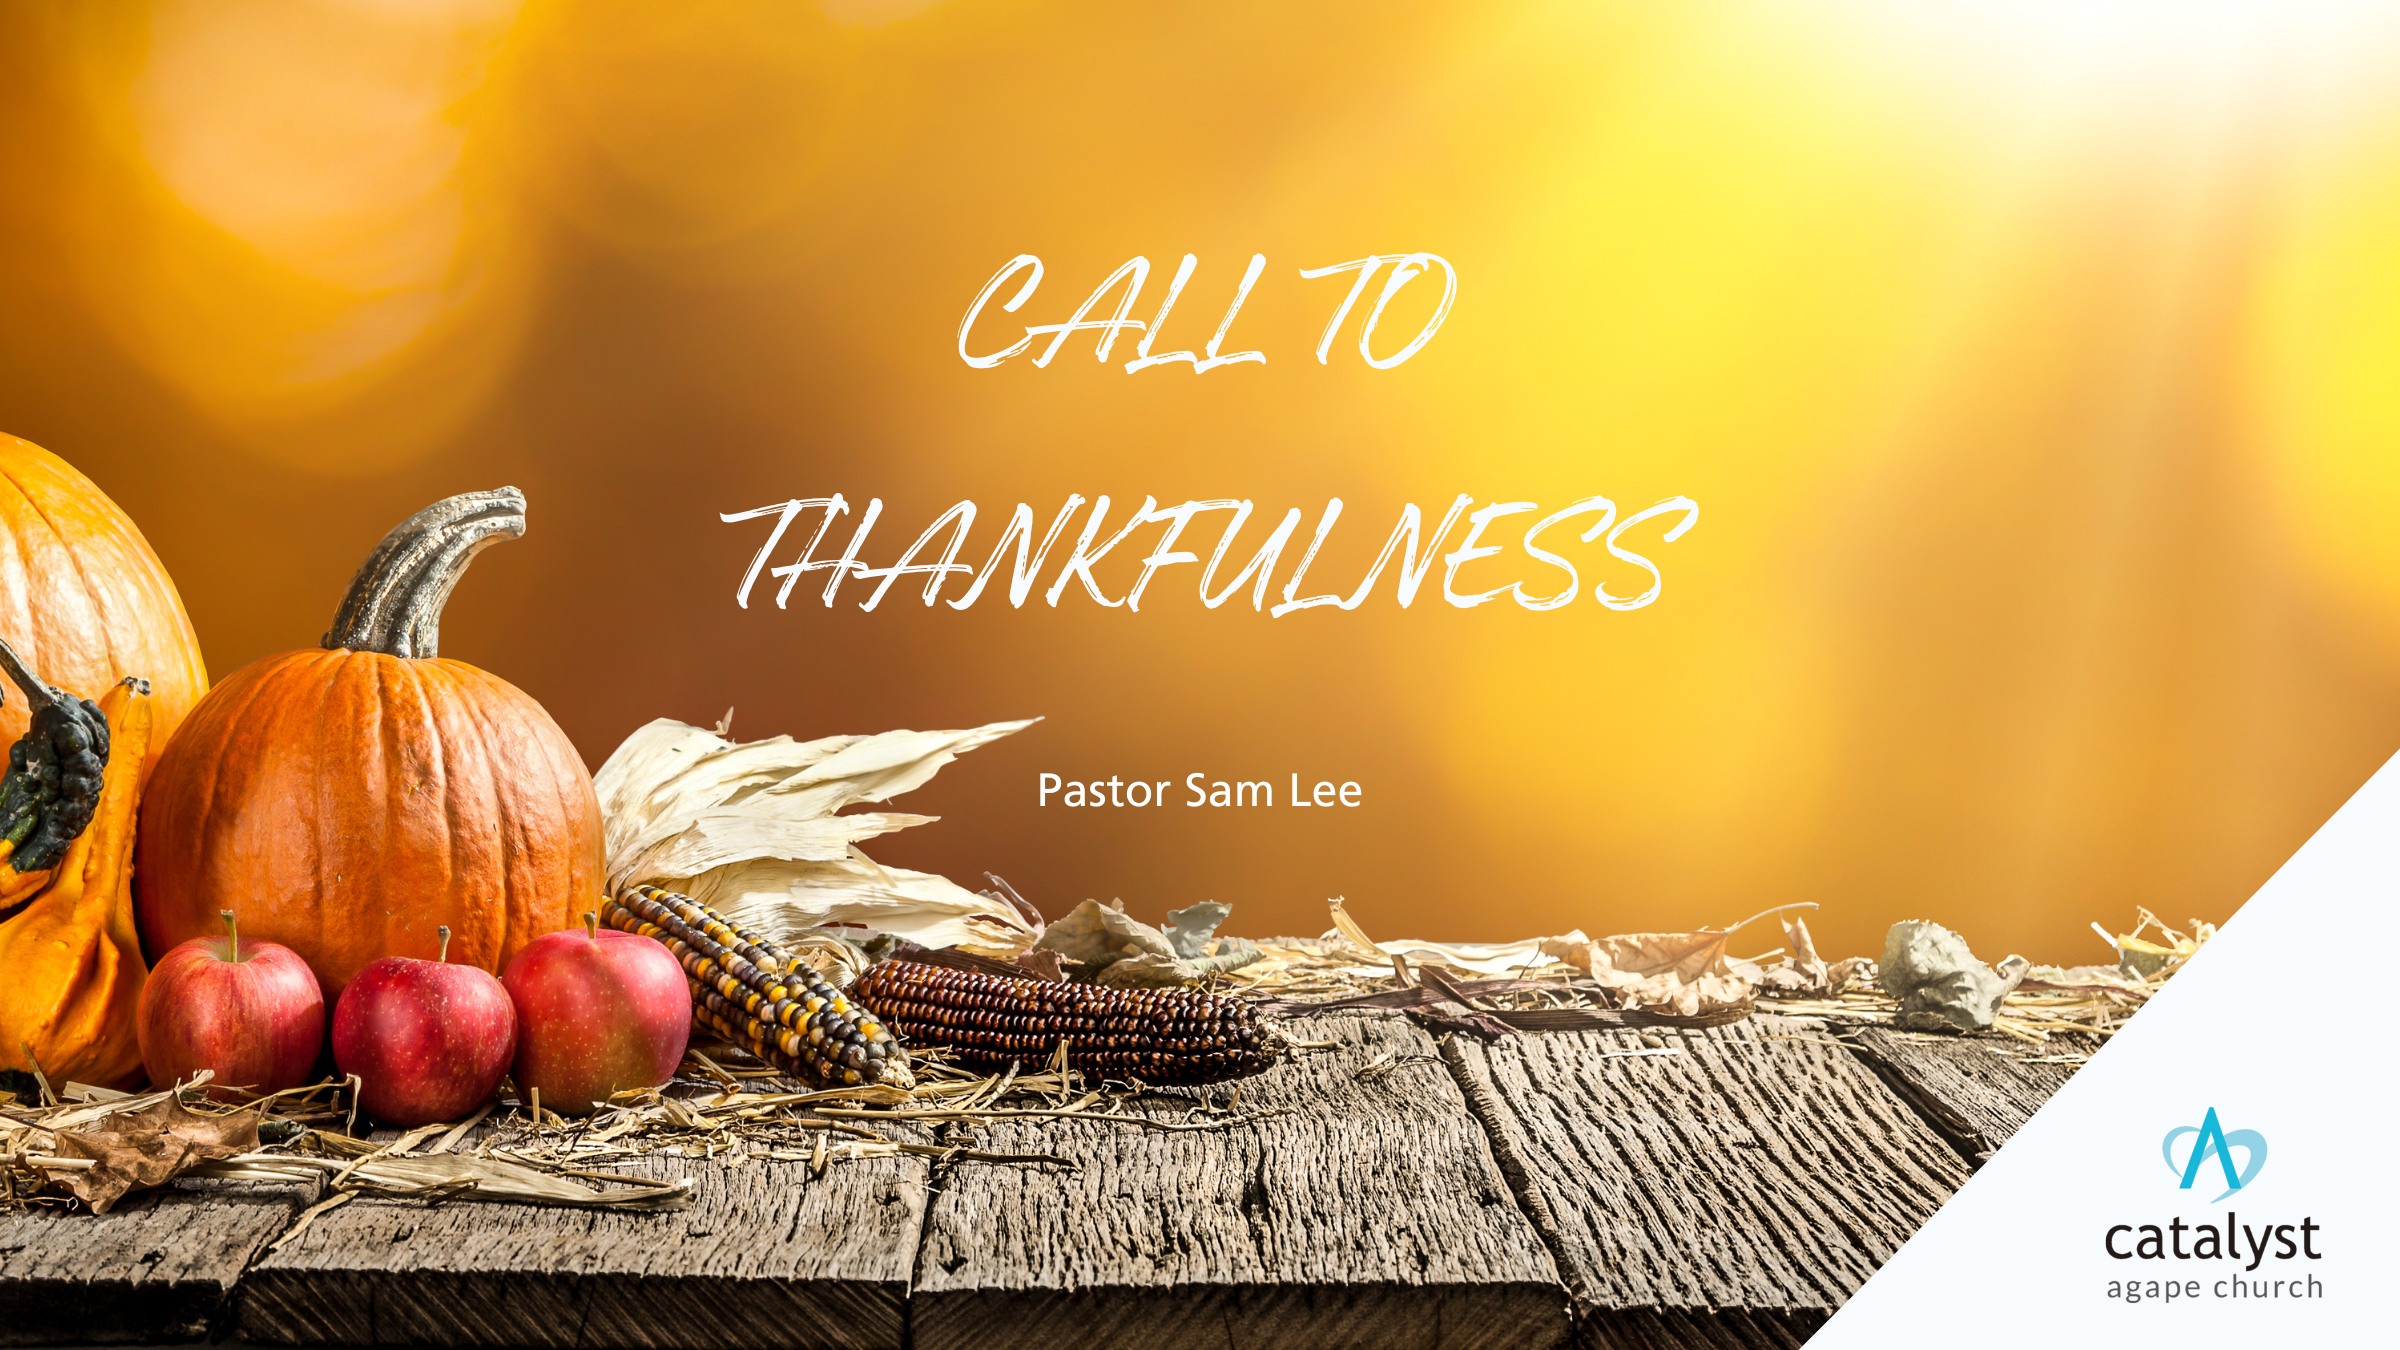 Call To Thankfulness